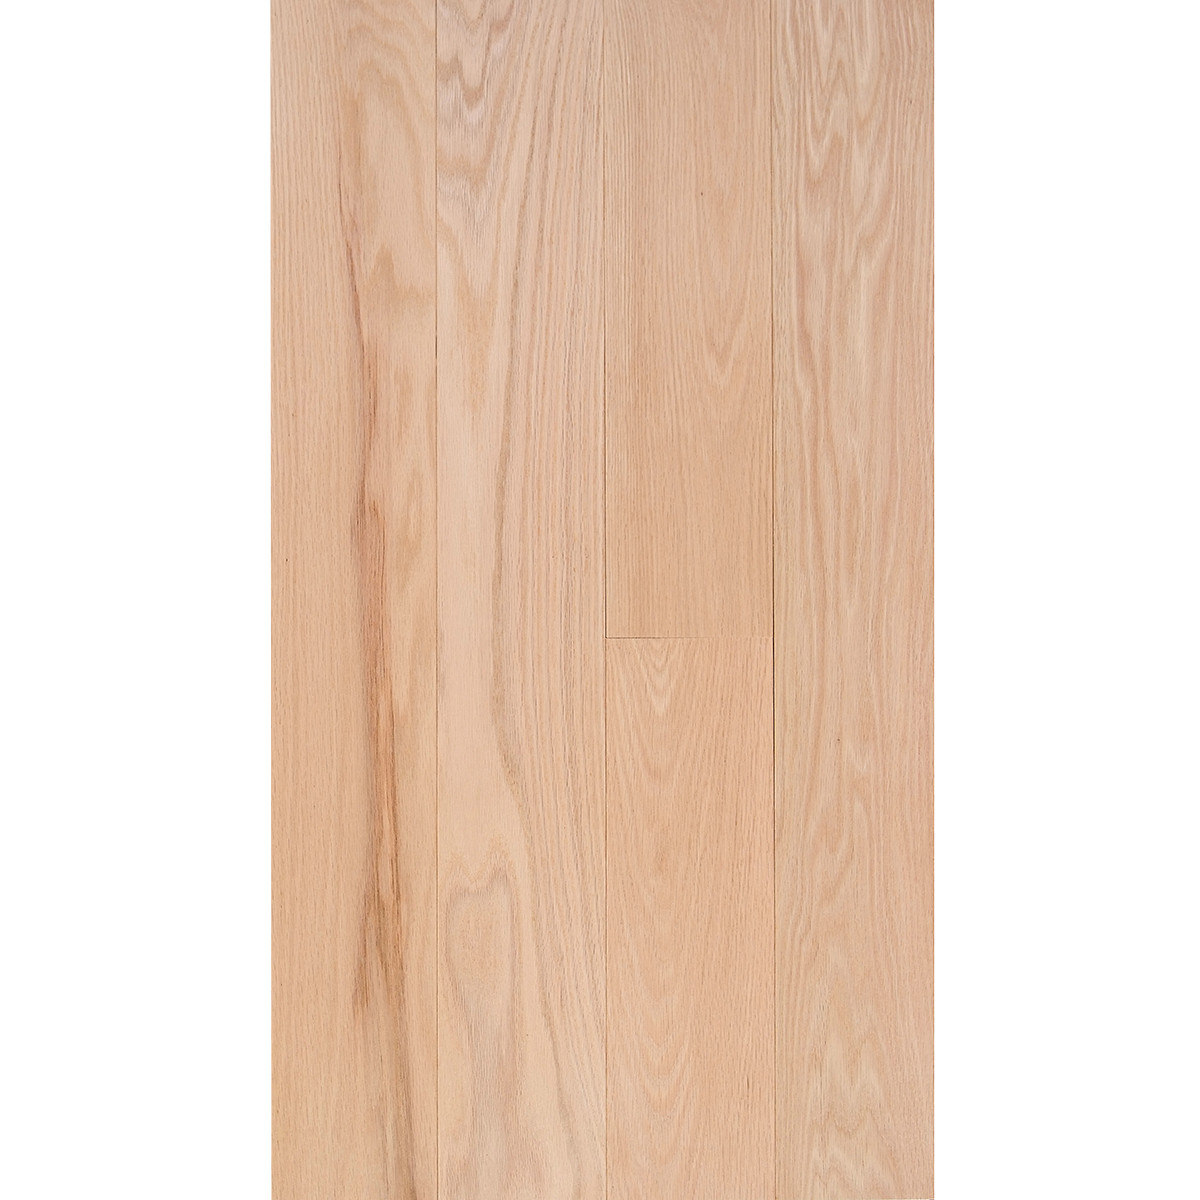 hardwood flooring job description of red oak 3 4 x 5 select grade flooring pertaining to fs 5 redoak select em flooring